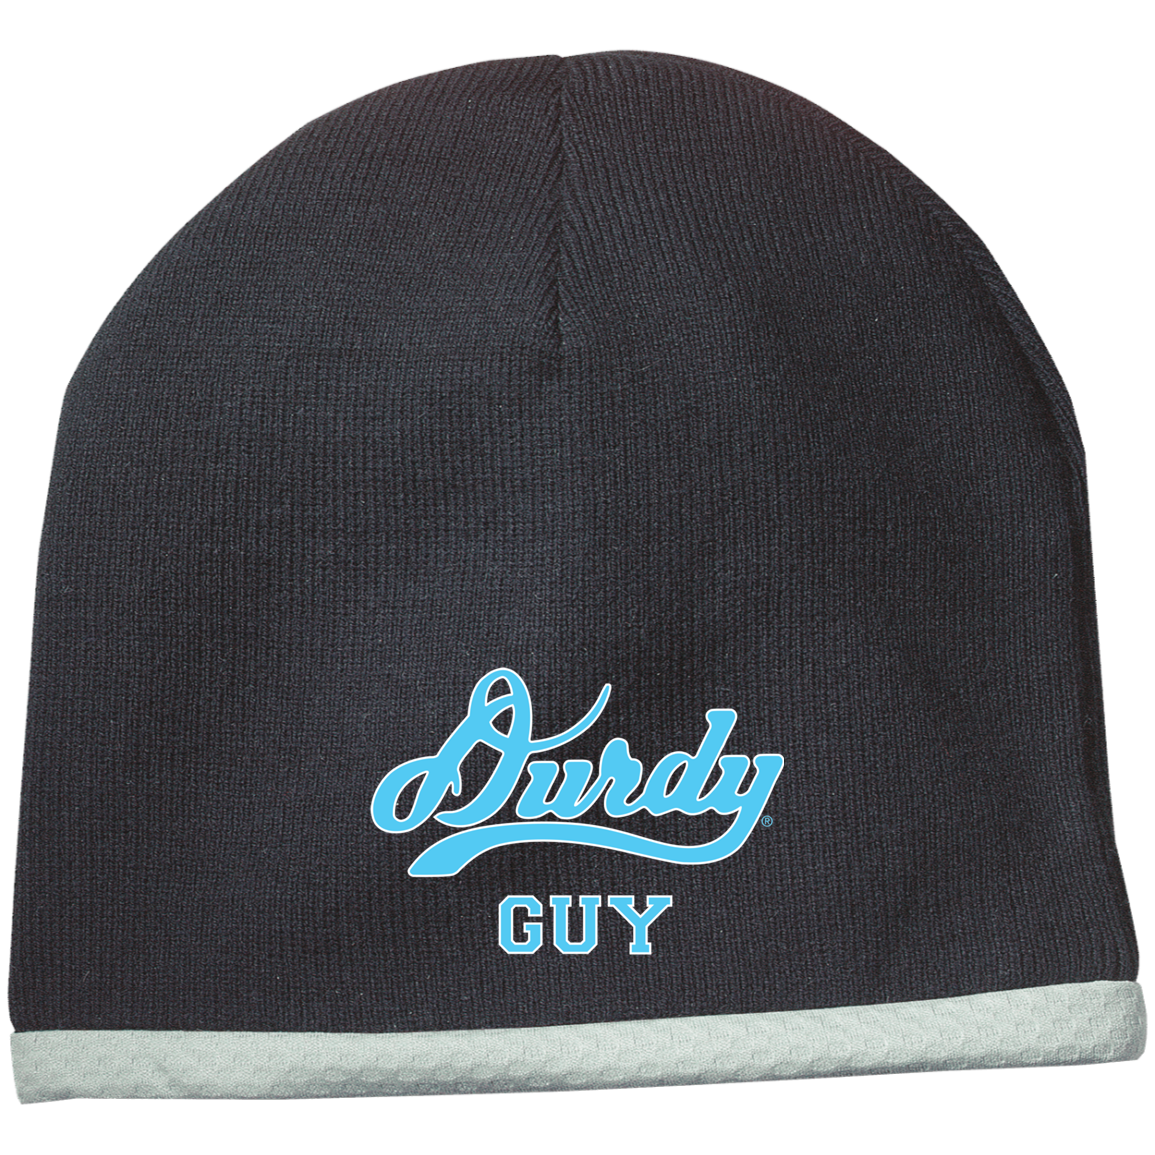 Durdy Guy Sport-Tek Performance Knit Cap